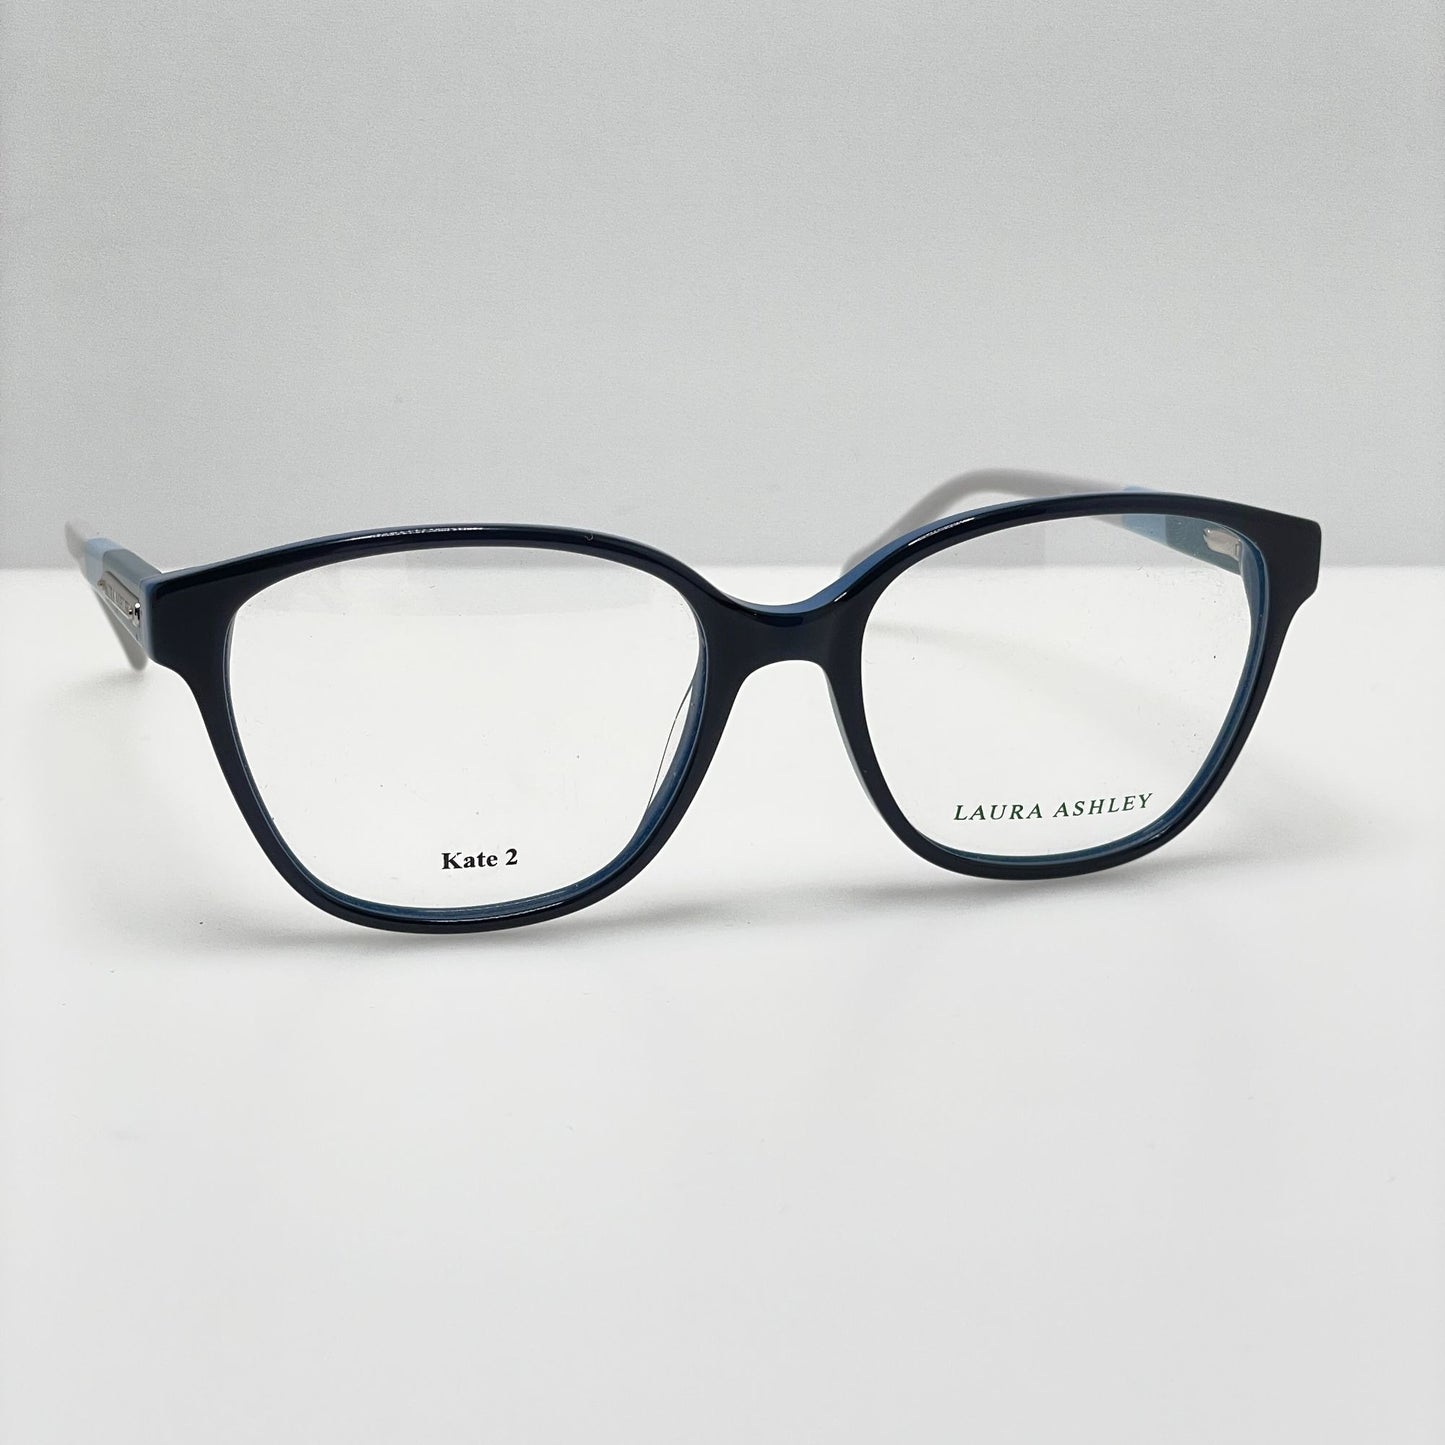 Laura Ashley Eyeglasses Eye Glasses Frames Kate 2 52-16-140